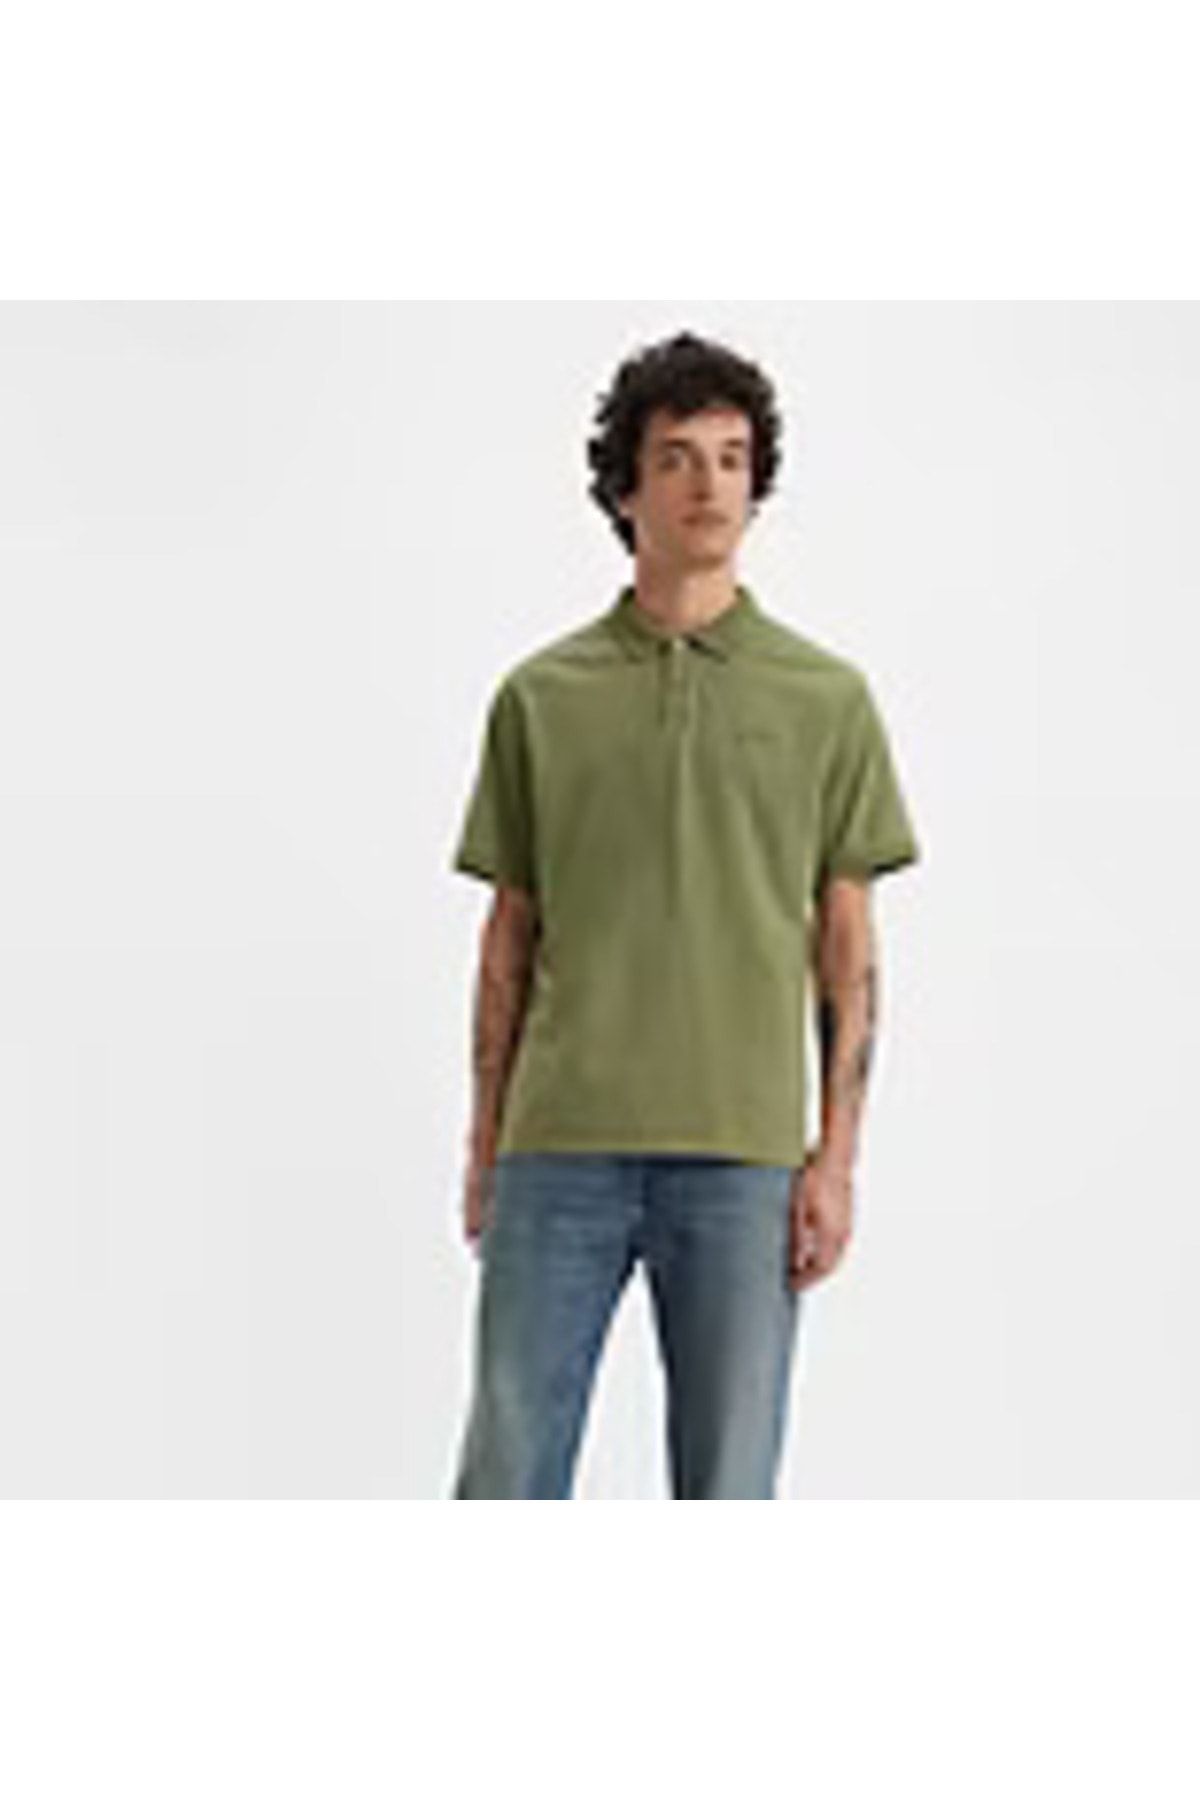 Levi's Erkek Polo Yaka Yeşil T-shirt - A6735-0003